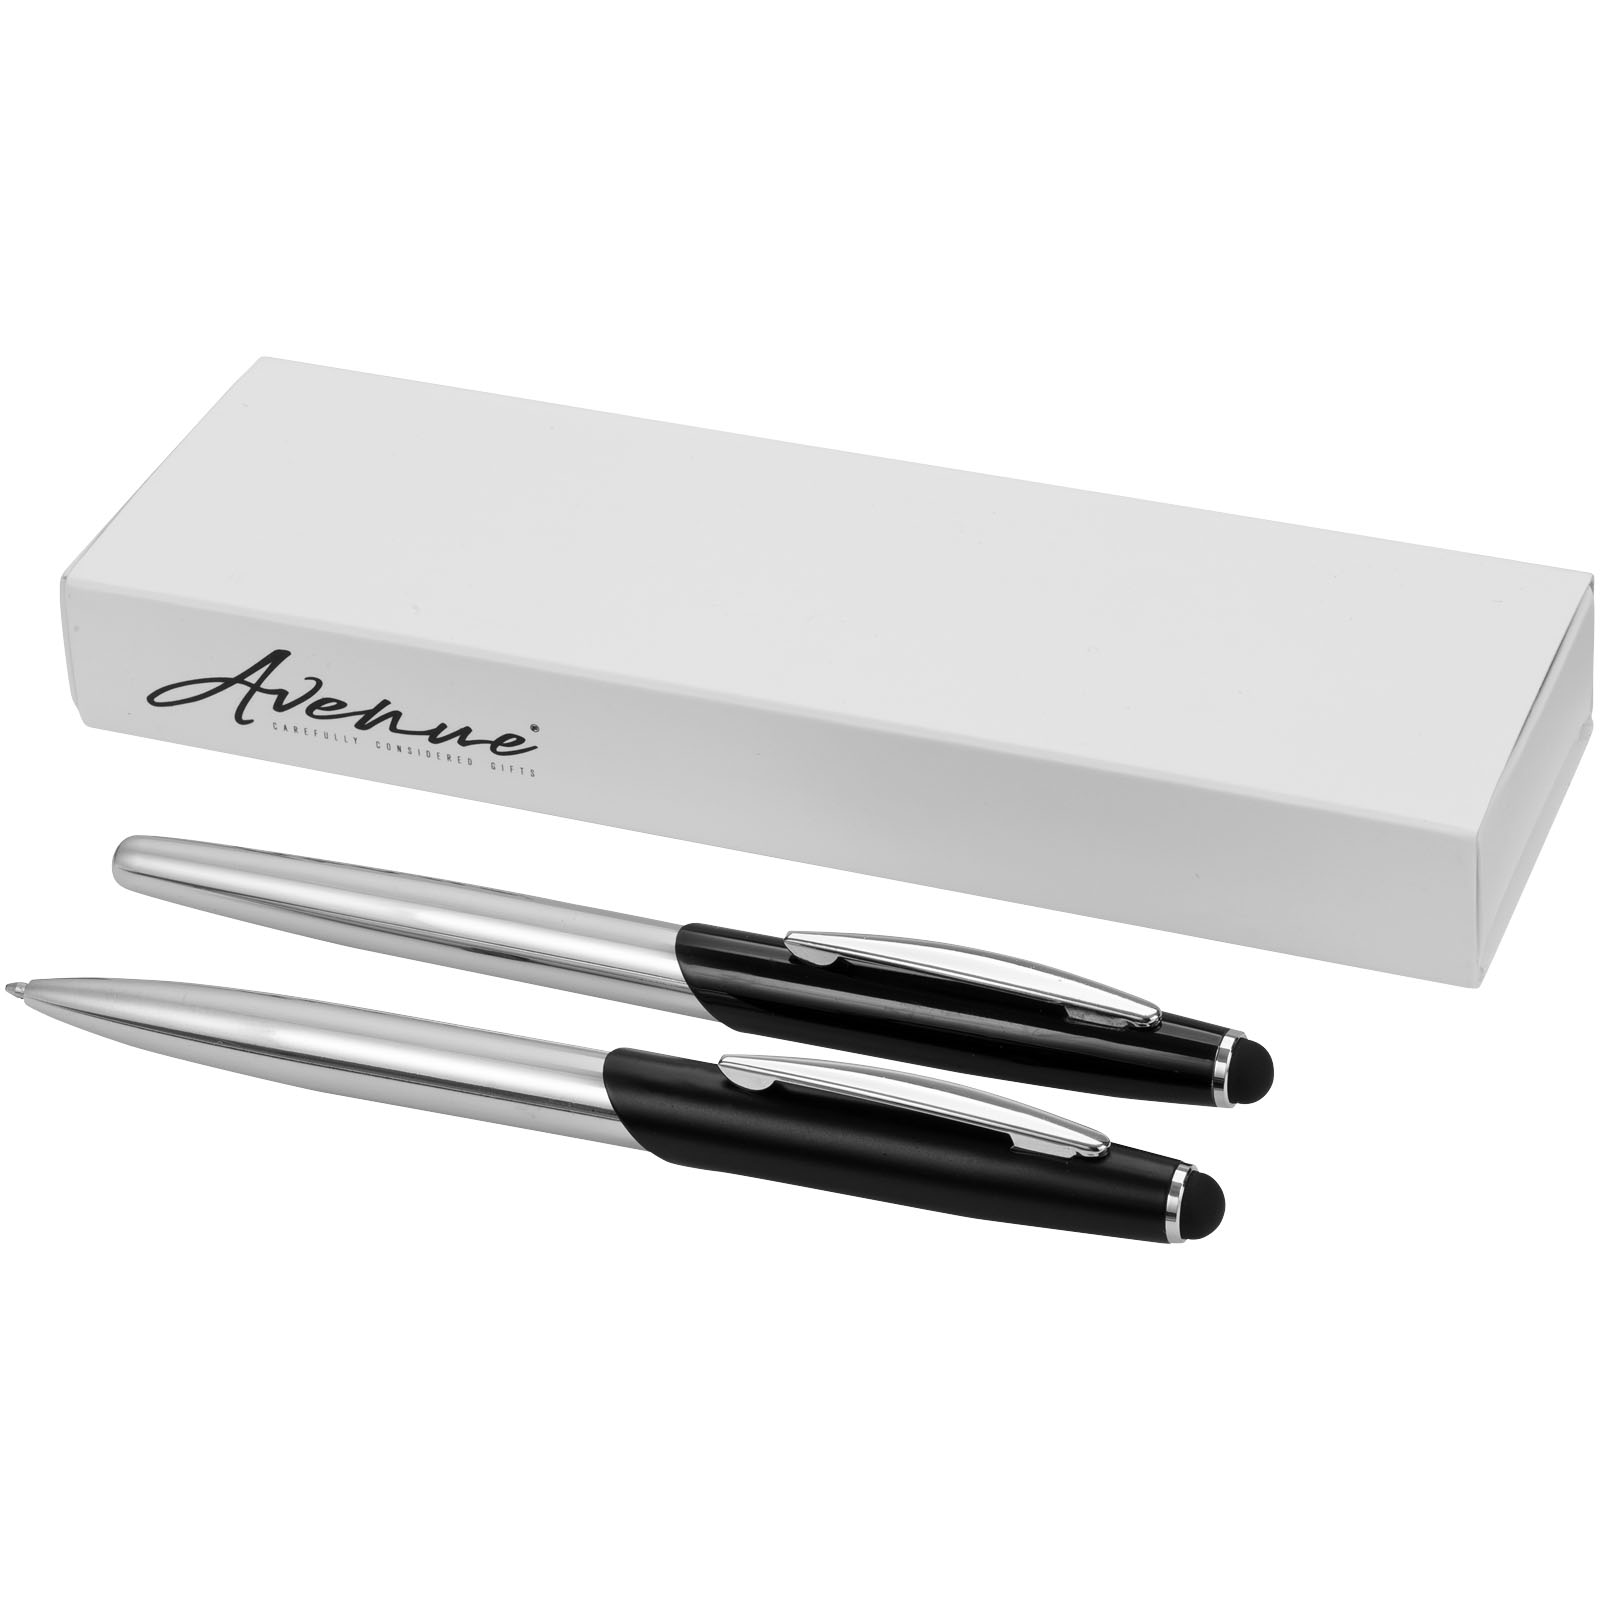 Advertising Ballpoint Pens - Geneva stylus ballpoint pen and rollerball pen set